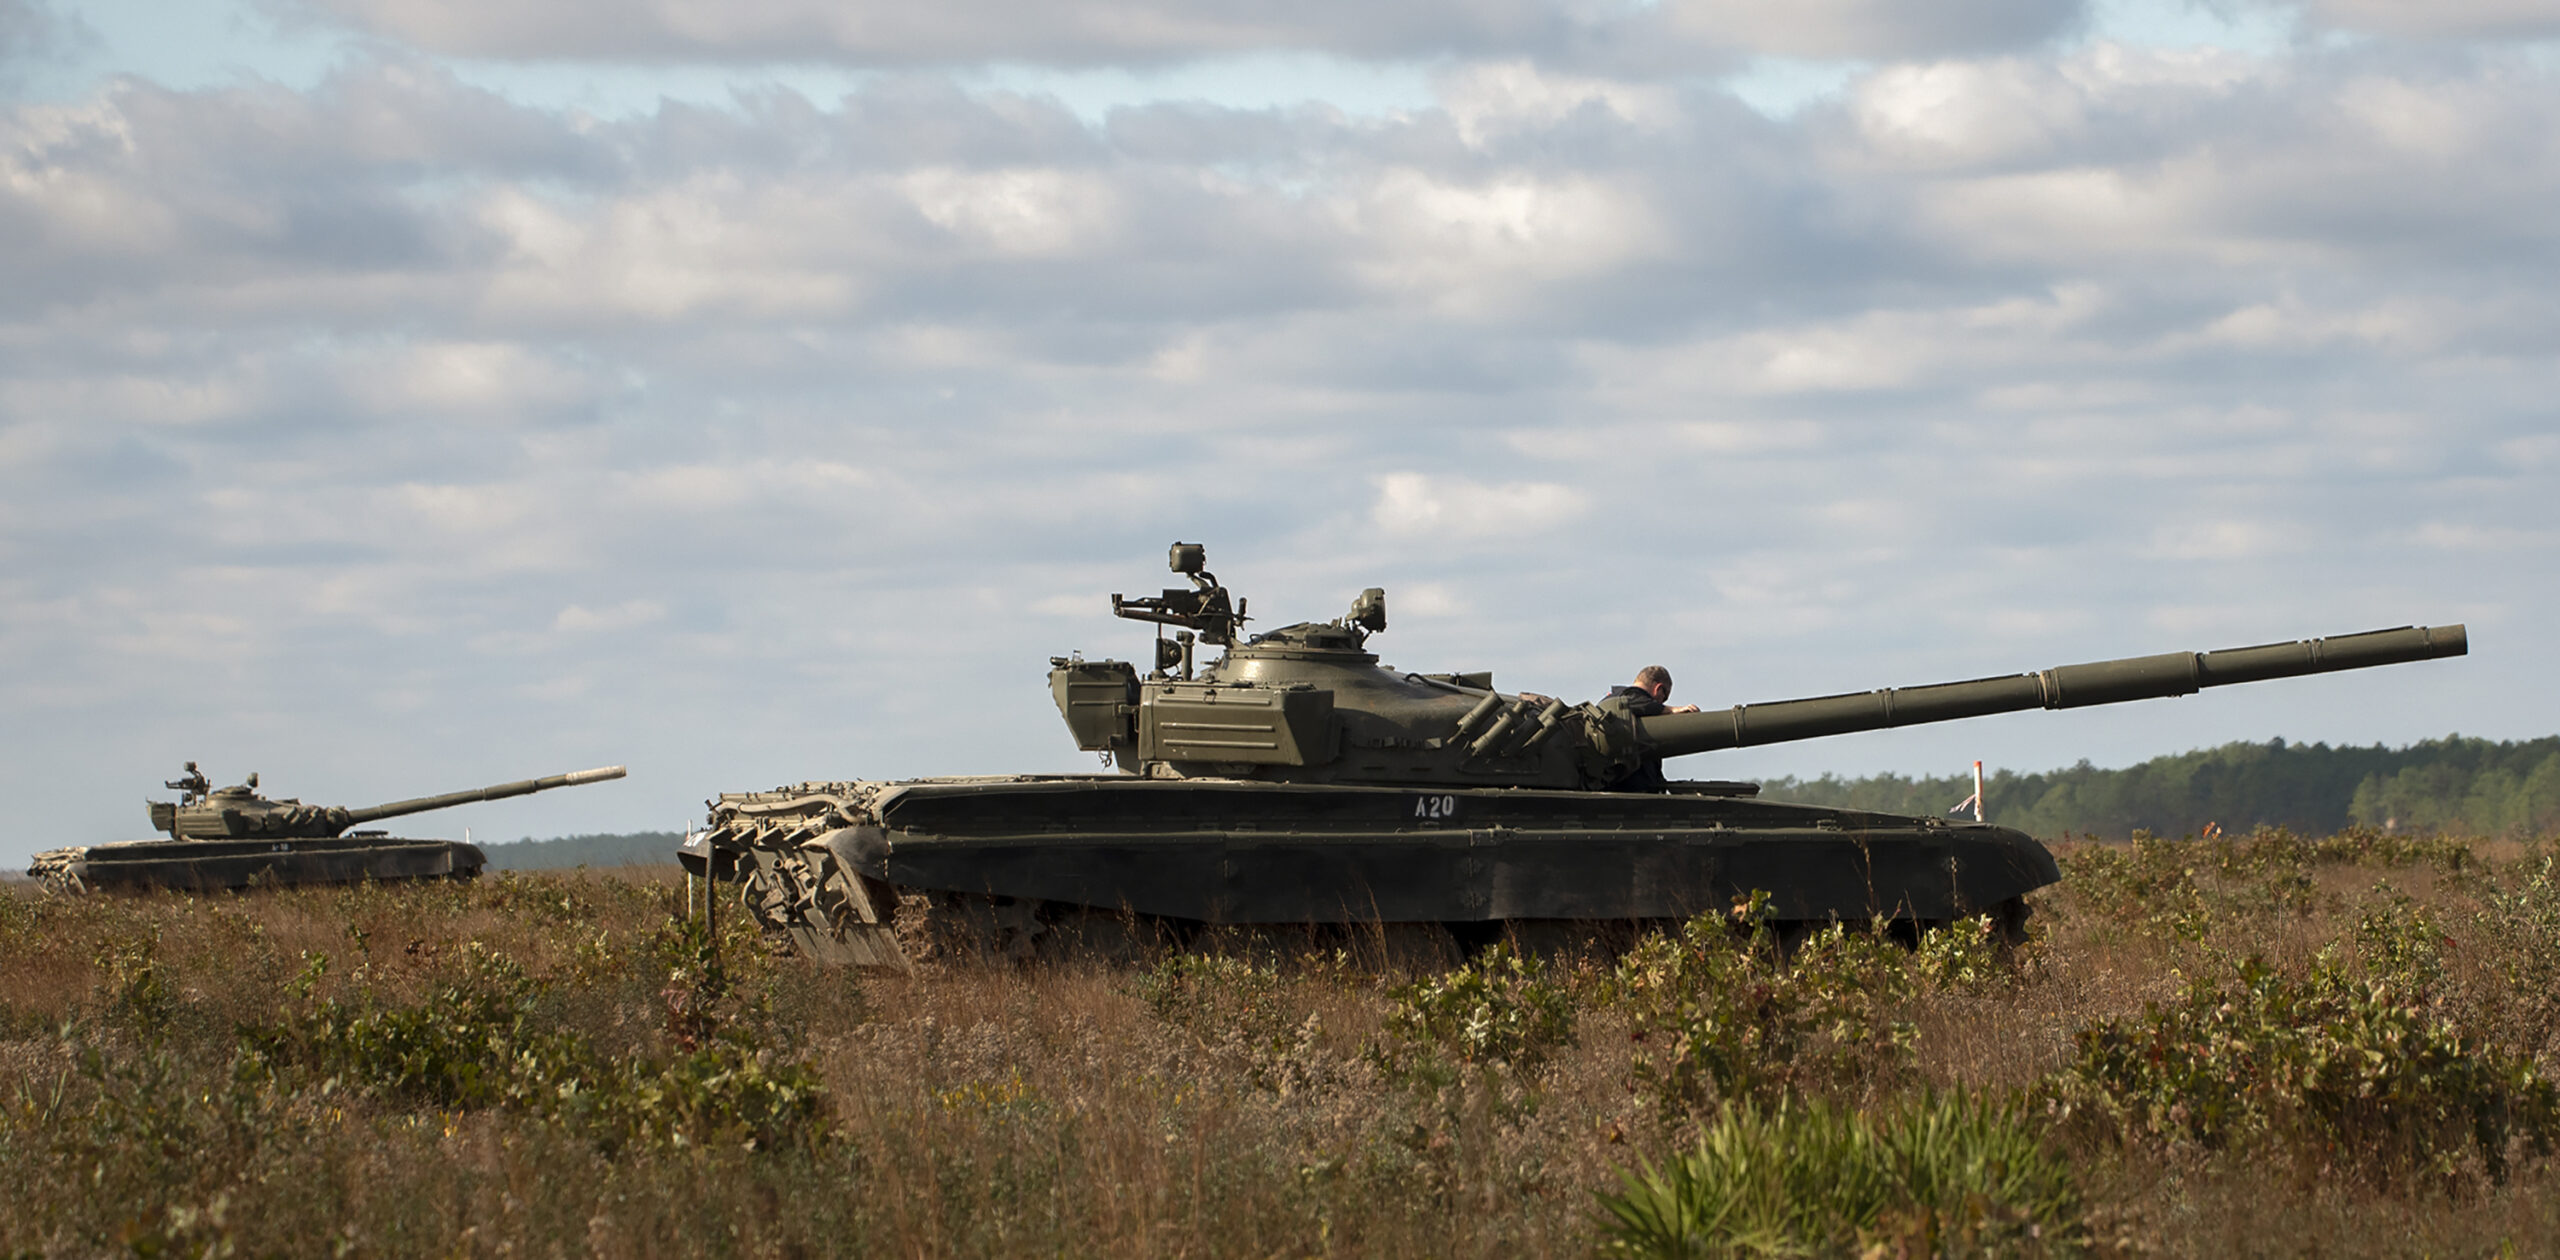 T-72 battle tanks